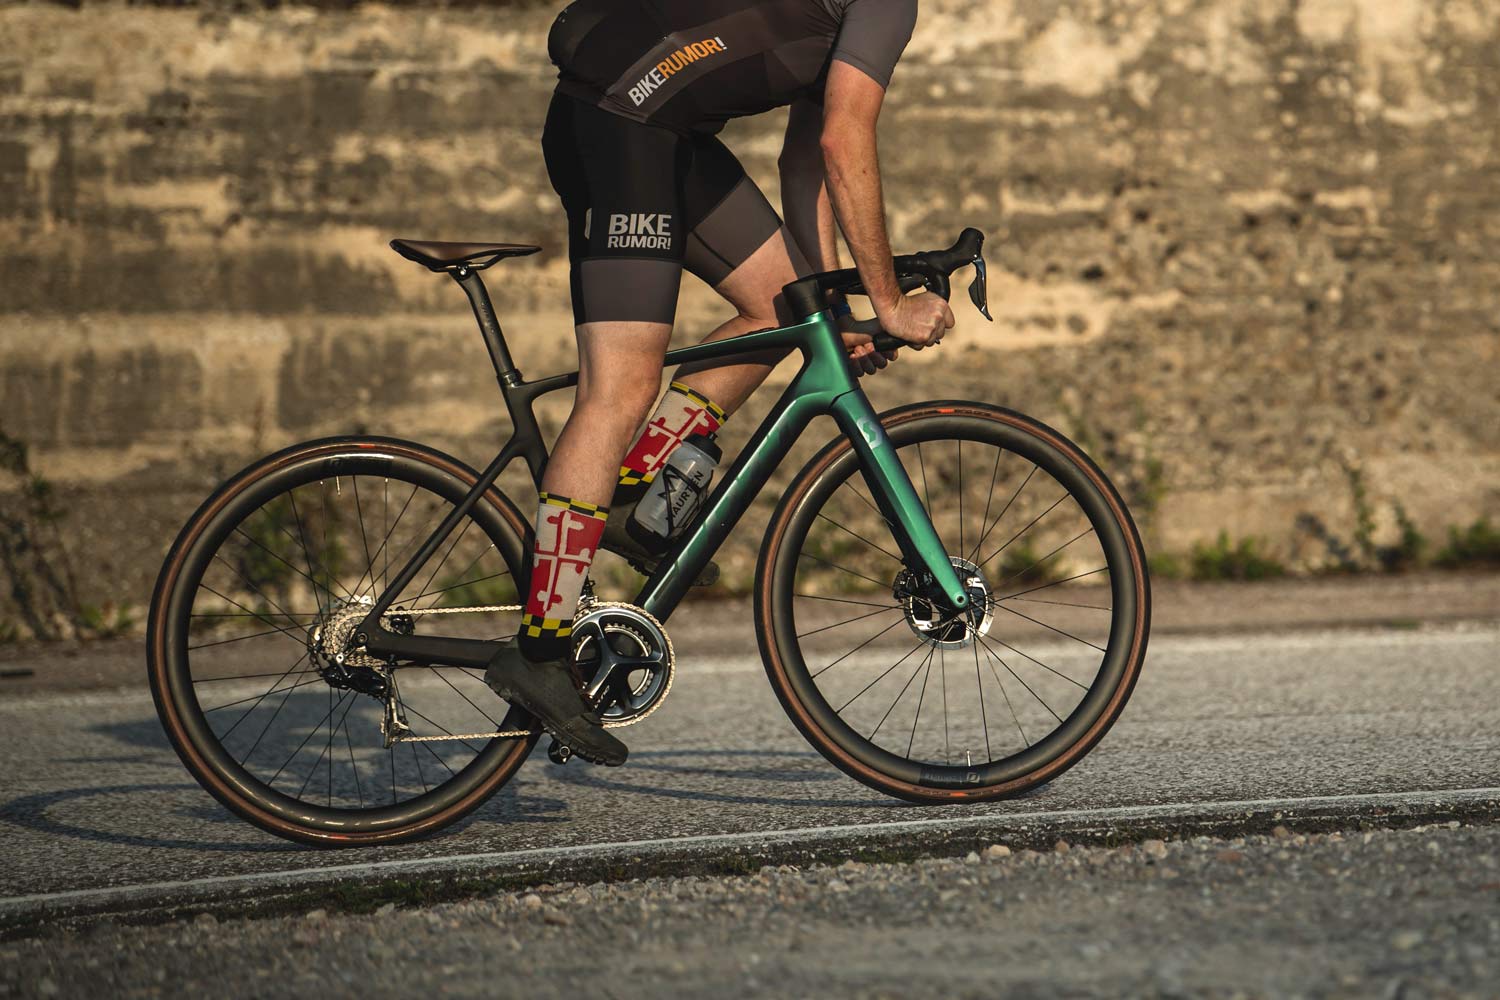 New Scott Addict RC eRide is "world's lightest" eroad bike Weigh in